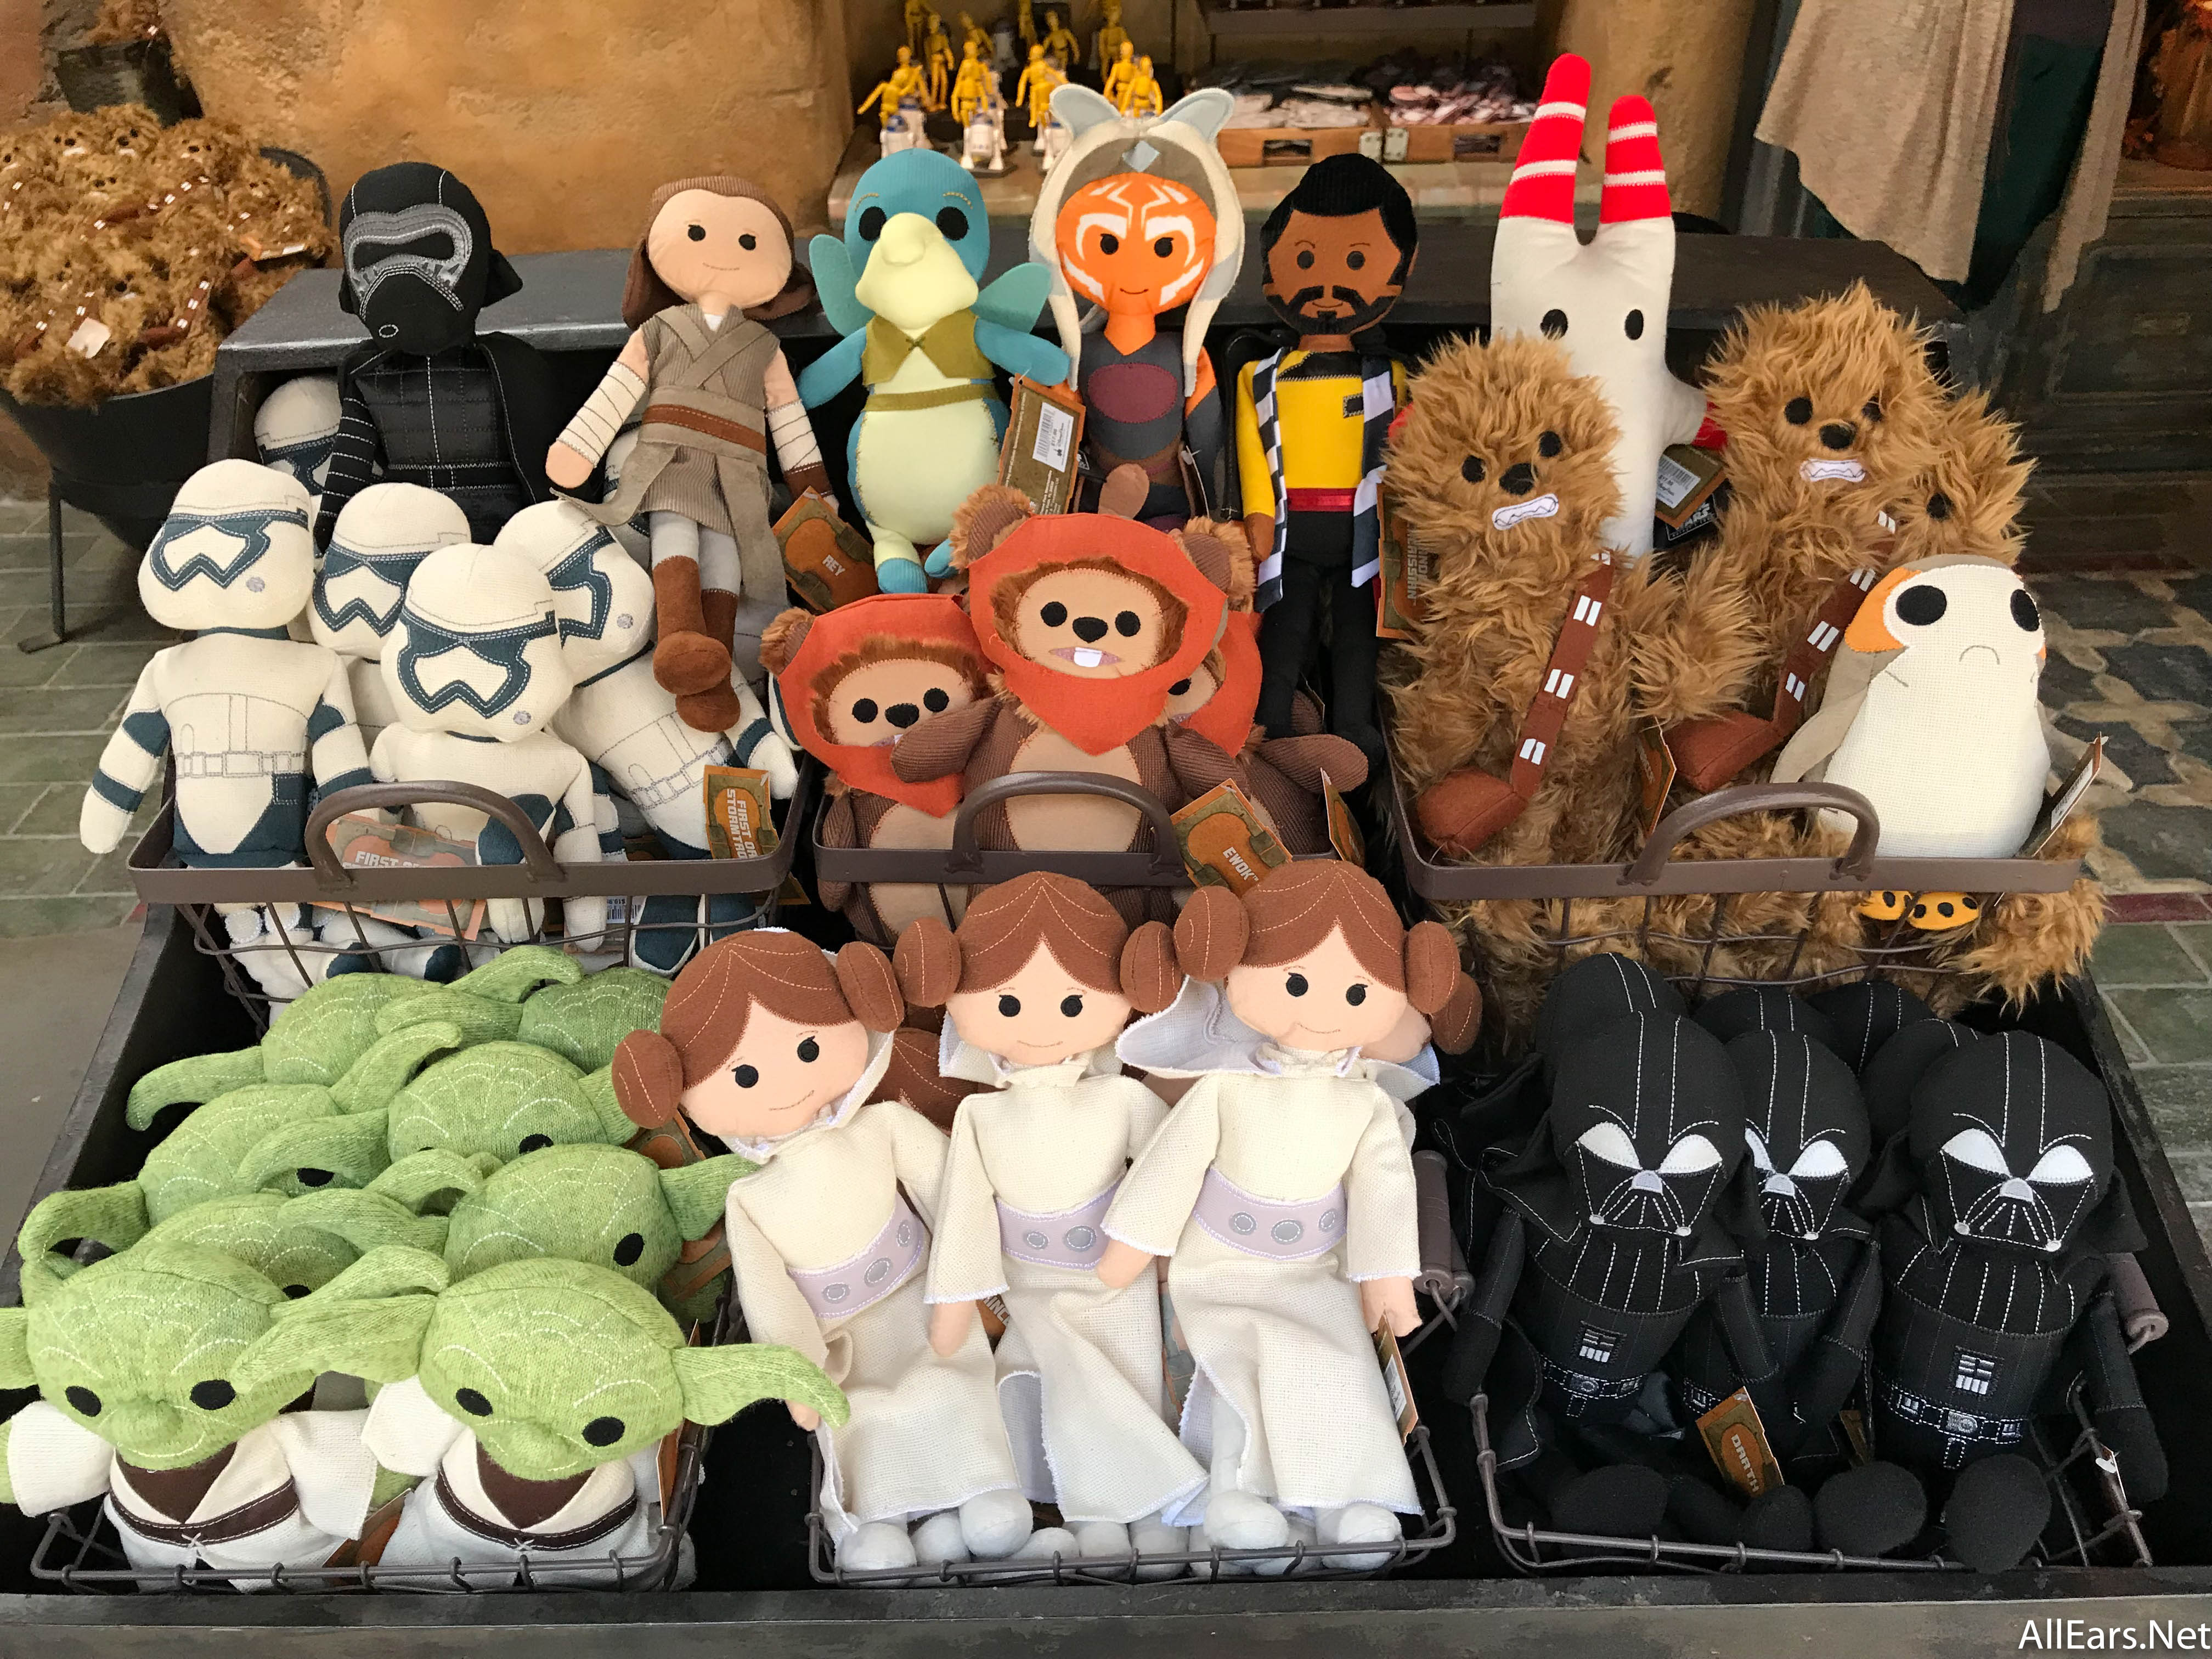 Disney Star Wars 10" Soft Plush Toy ONE SUPPLIED you choose 